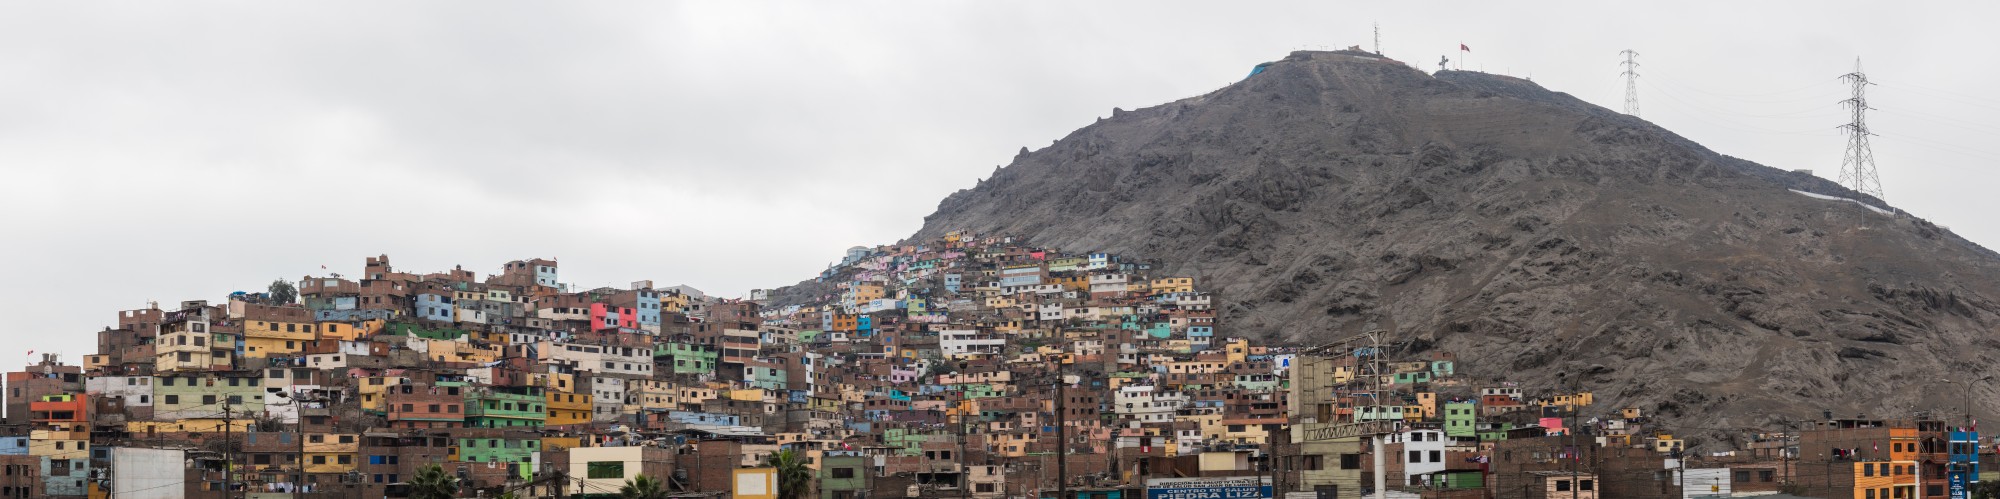 Cerro de San Cristóbal, Lima, Perú, 2015-07-28, DD 114-116 PAN